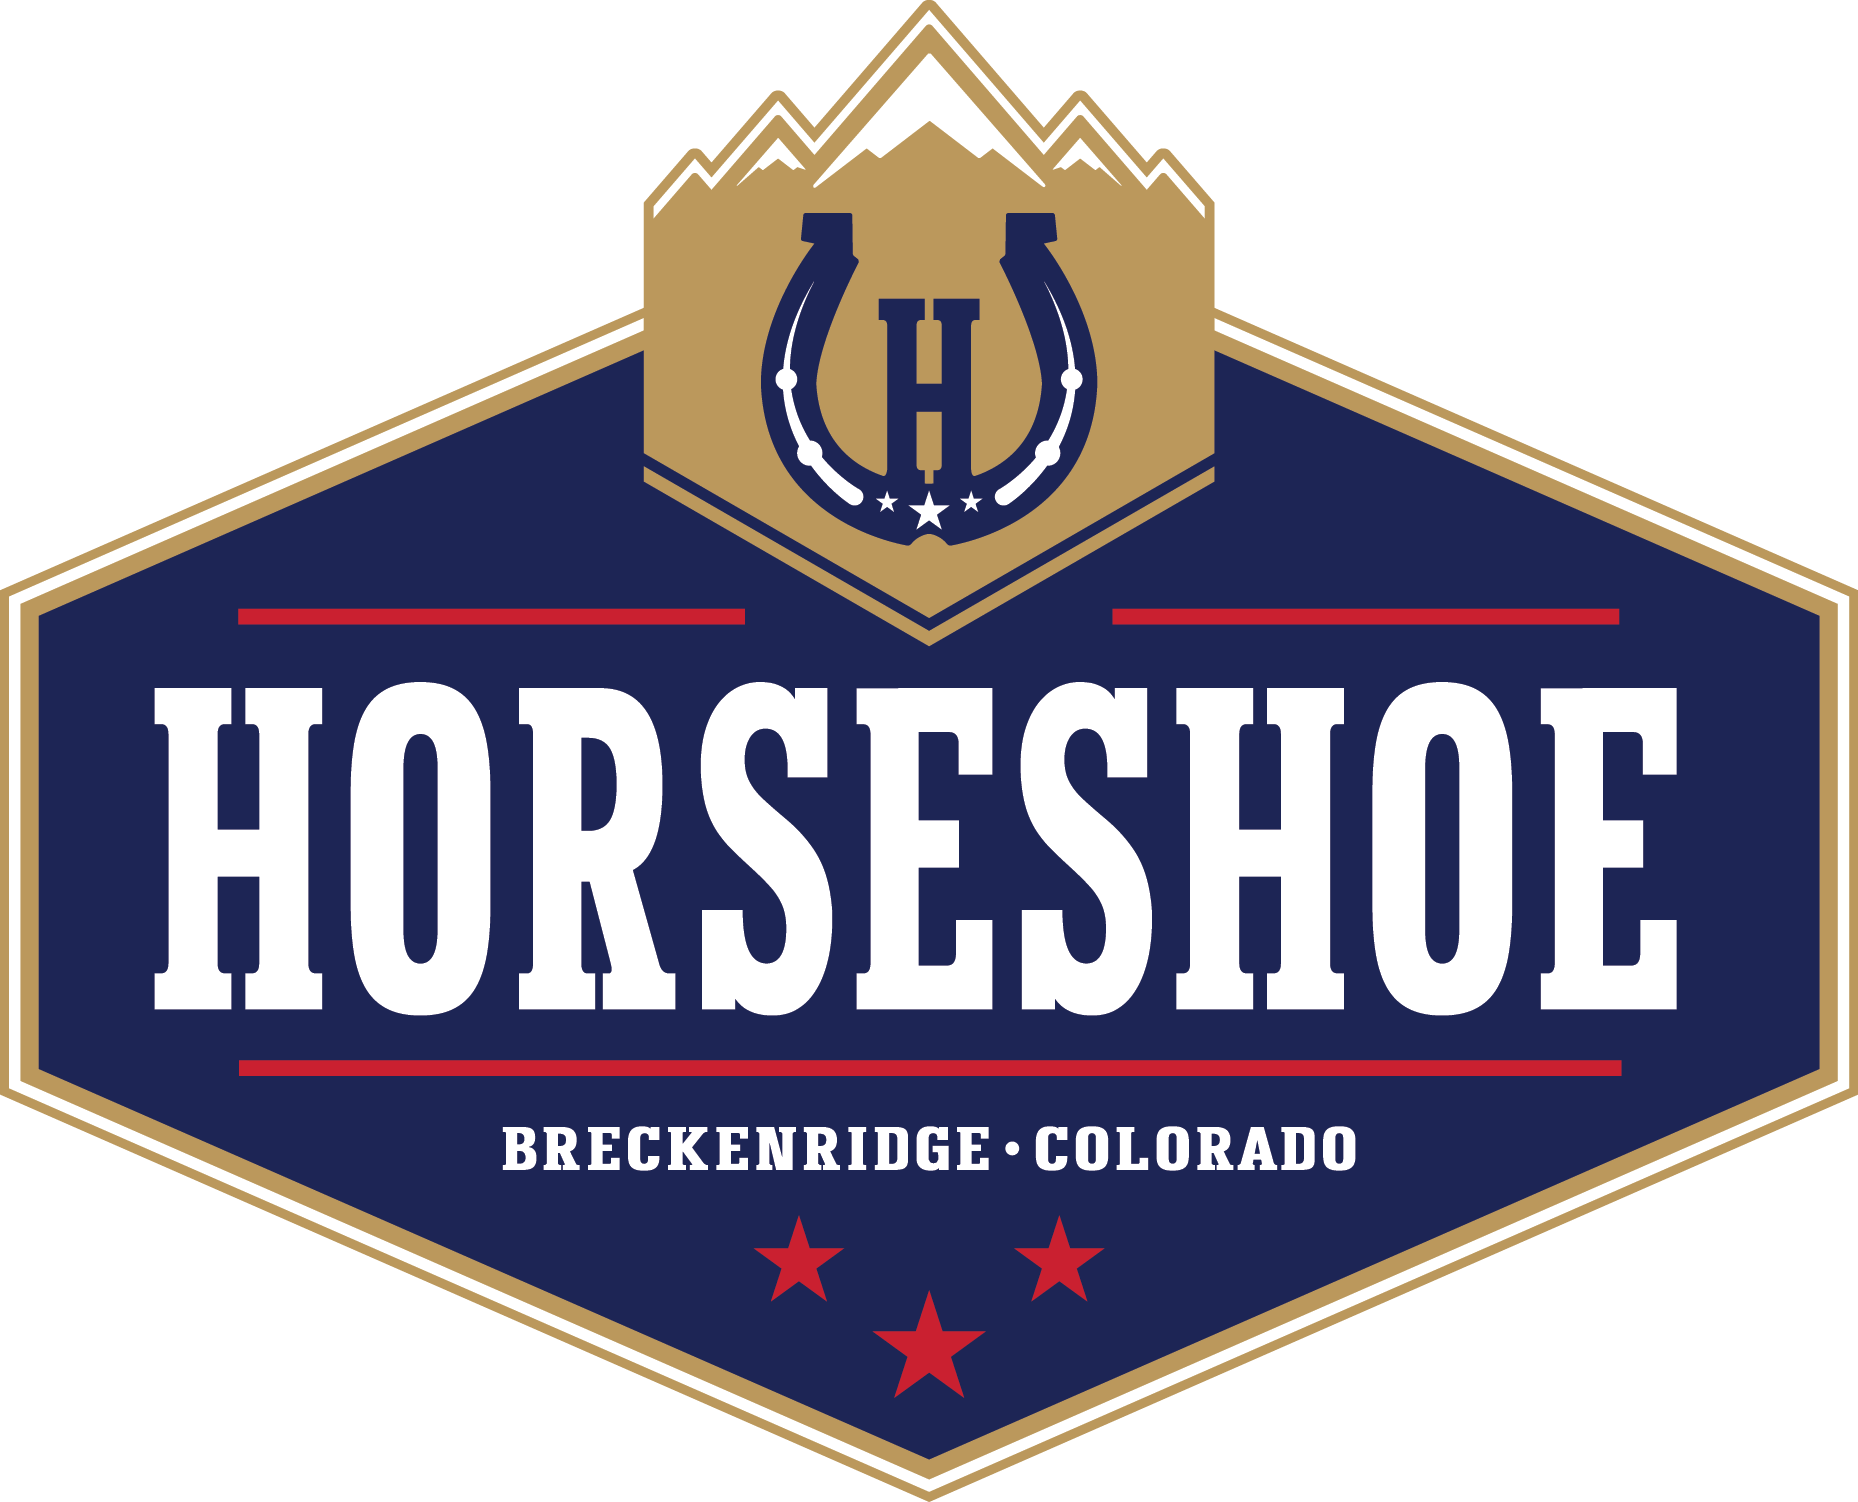 Horseshoe logo scroll